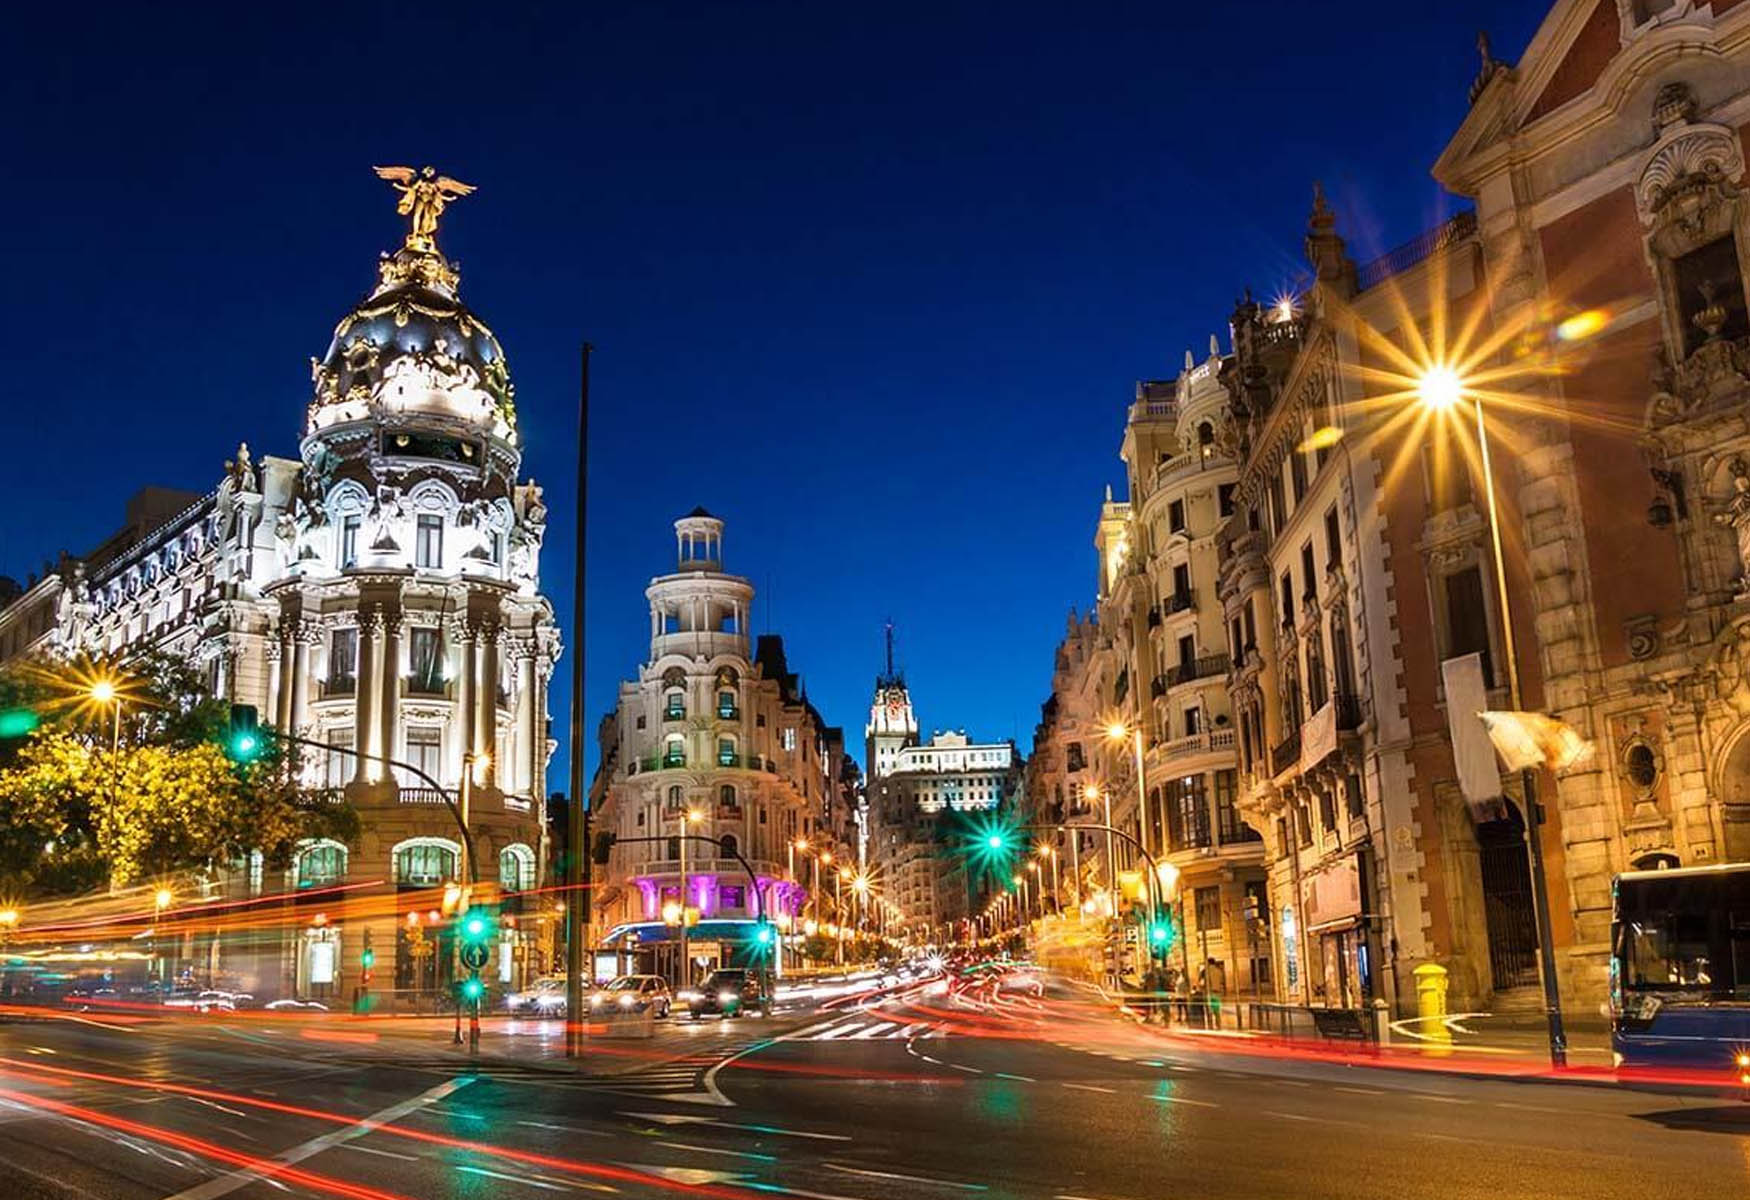 MADRID Itinerary – MUST READ!